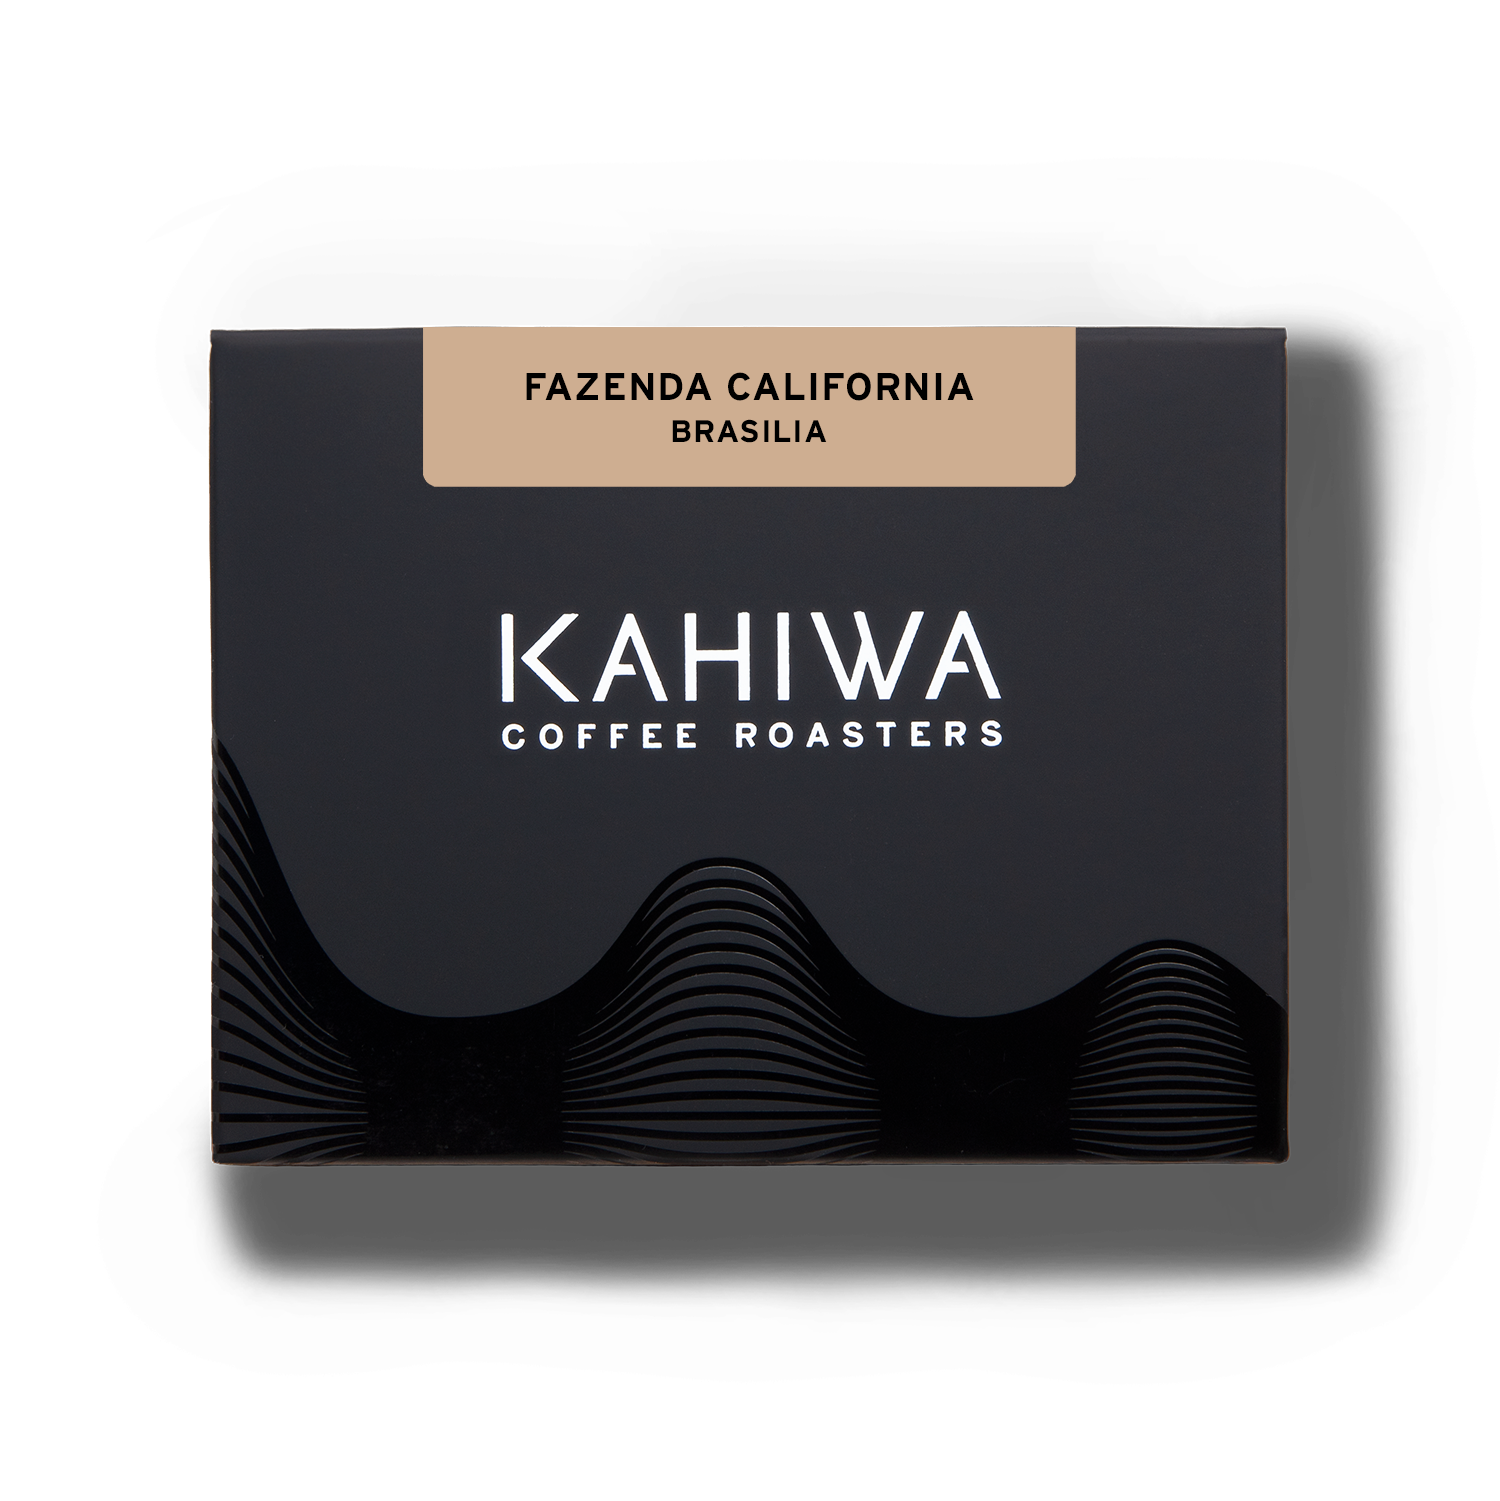 FAZENDA CALIFORNIA - Kahiwa Coffee Roasters